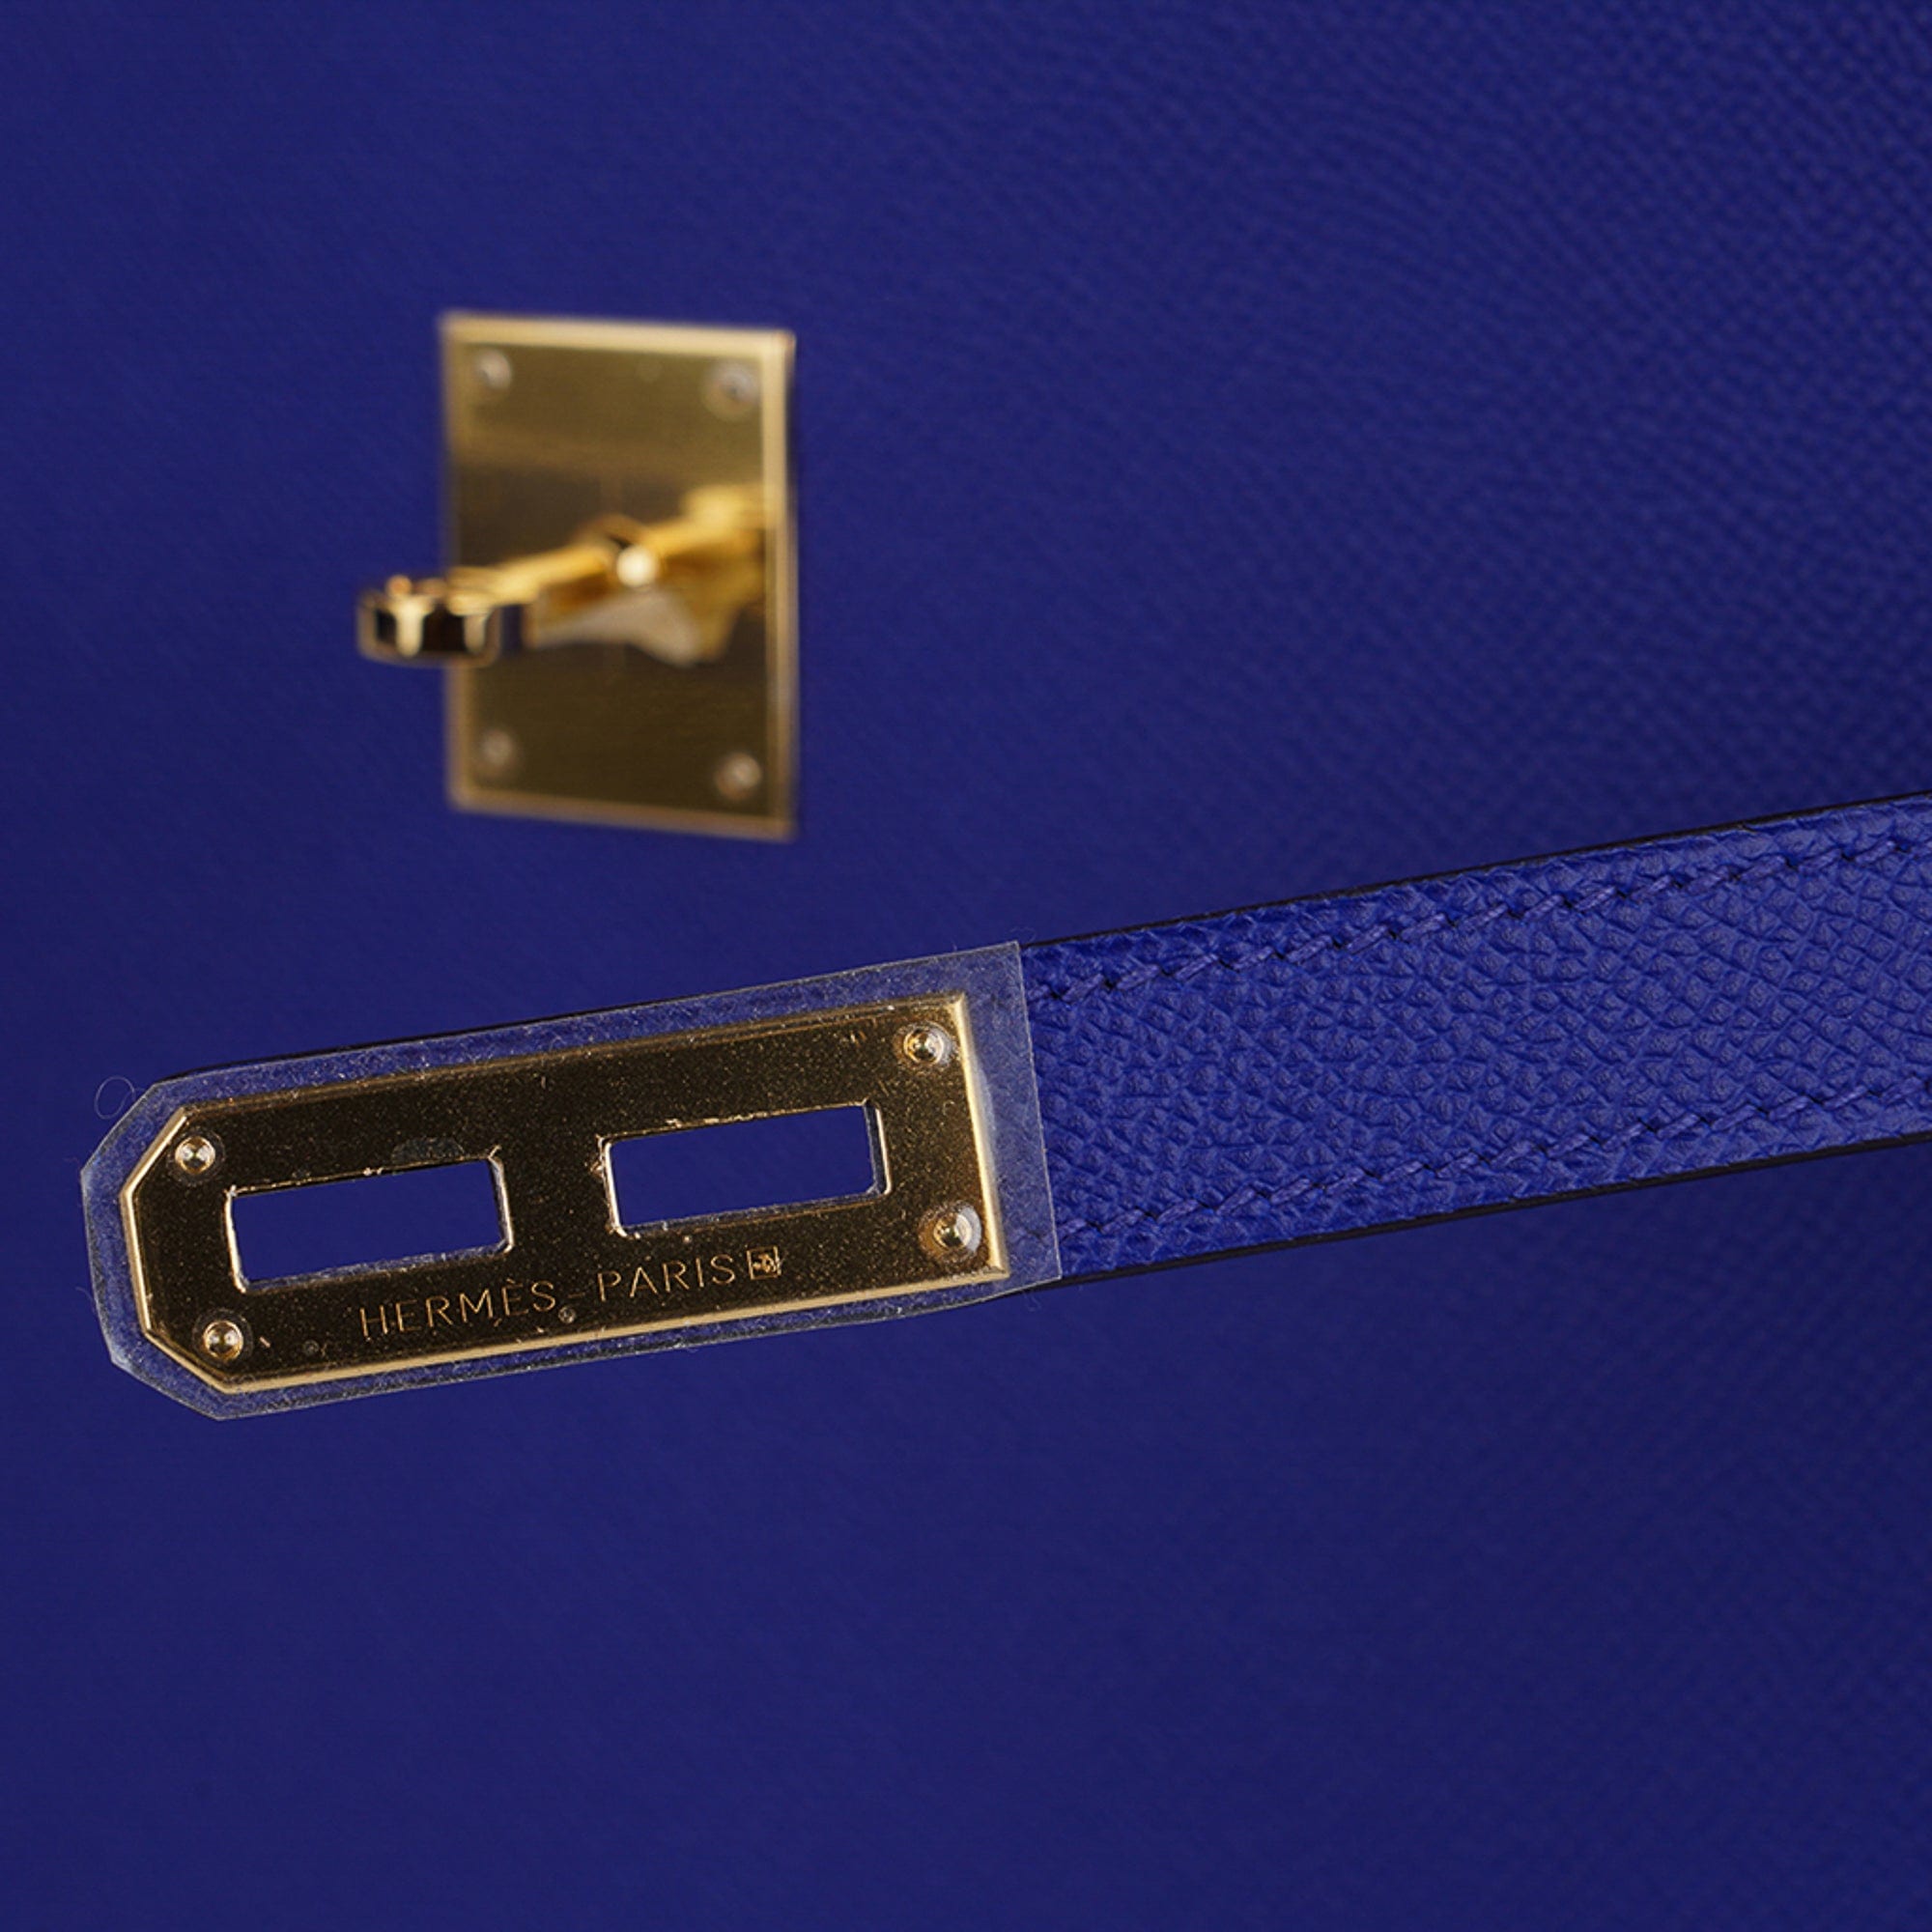 Hermès Epsom Kelly Dépèche 38 - Brown Briefcases, Bags - HER548534